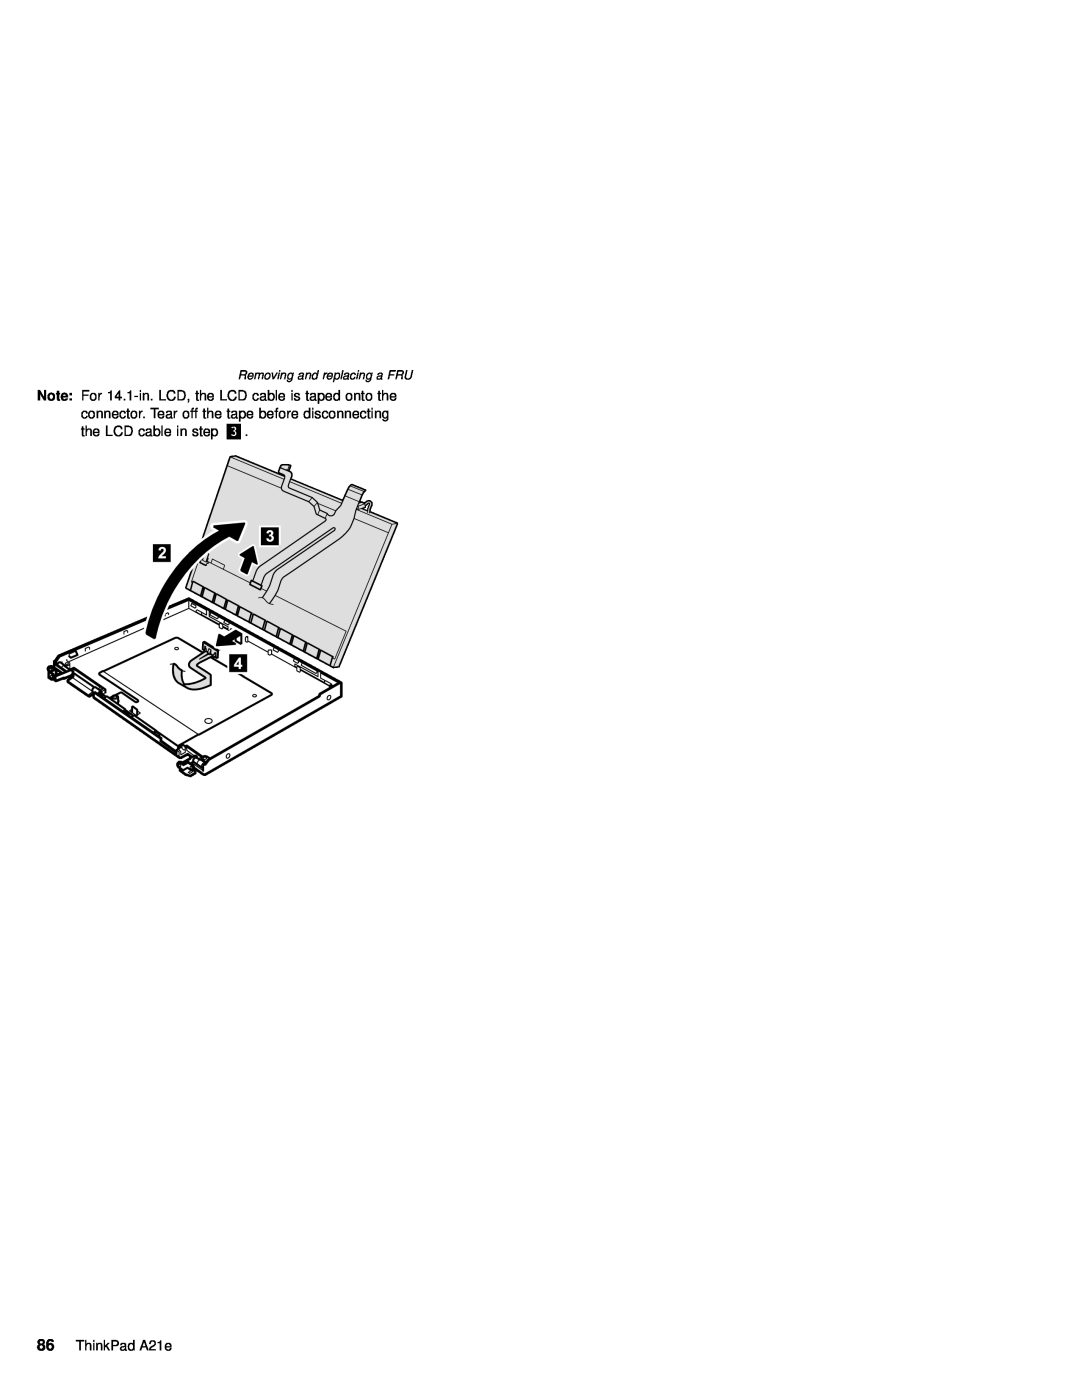 IBM MT 2632 manual ThinkPad A21e, Removing and replacing a FRU 